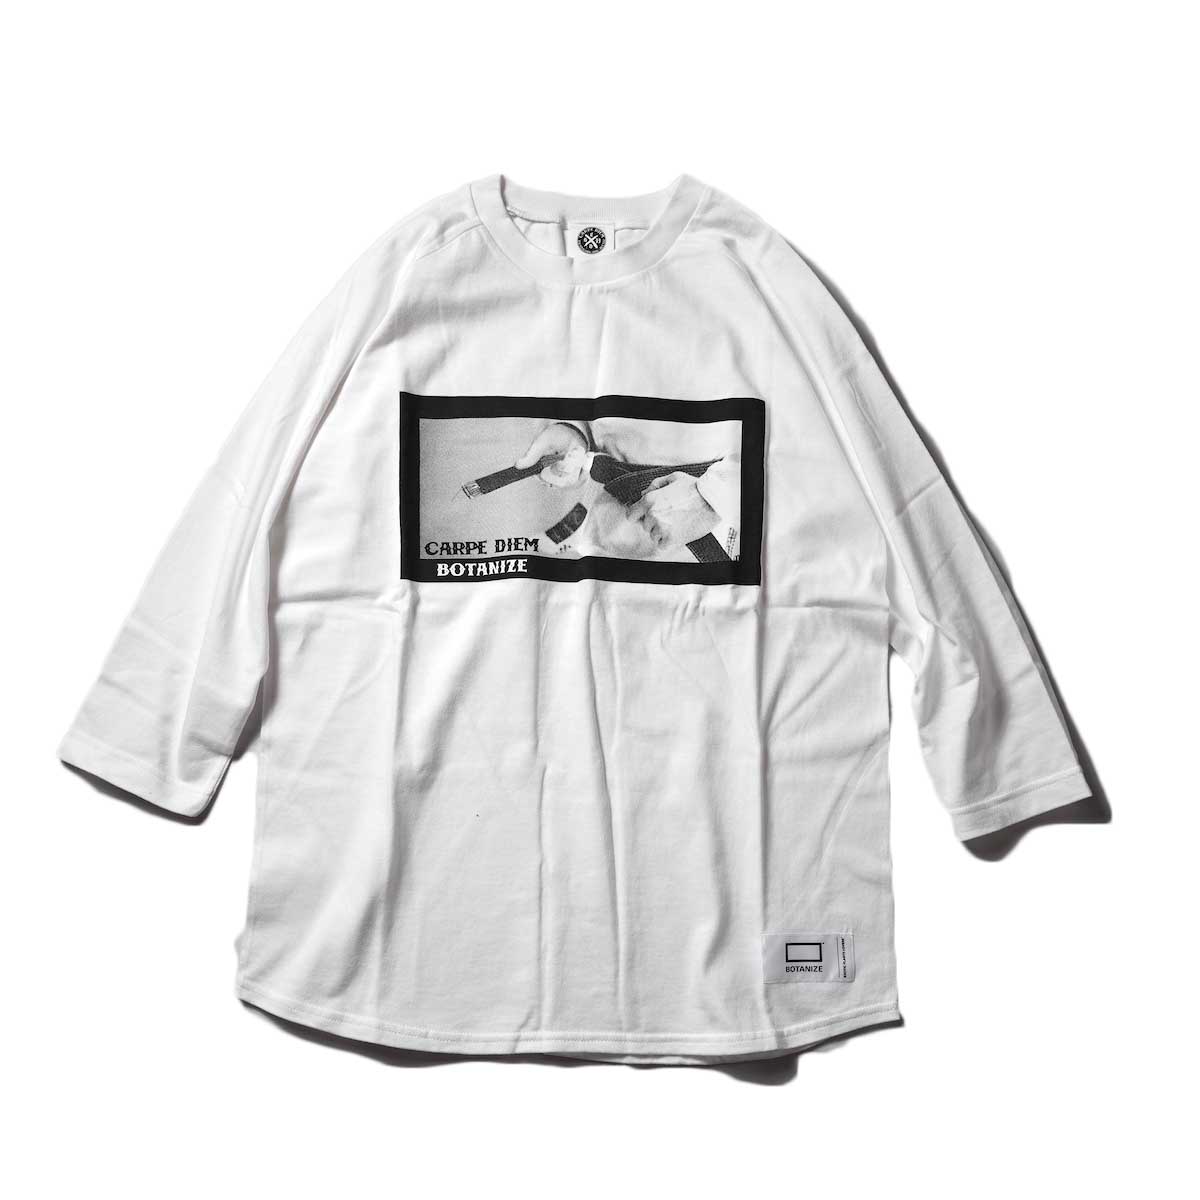 BOTANIZE × CARE DIEM 七分丈Tシャツ (White)